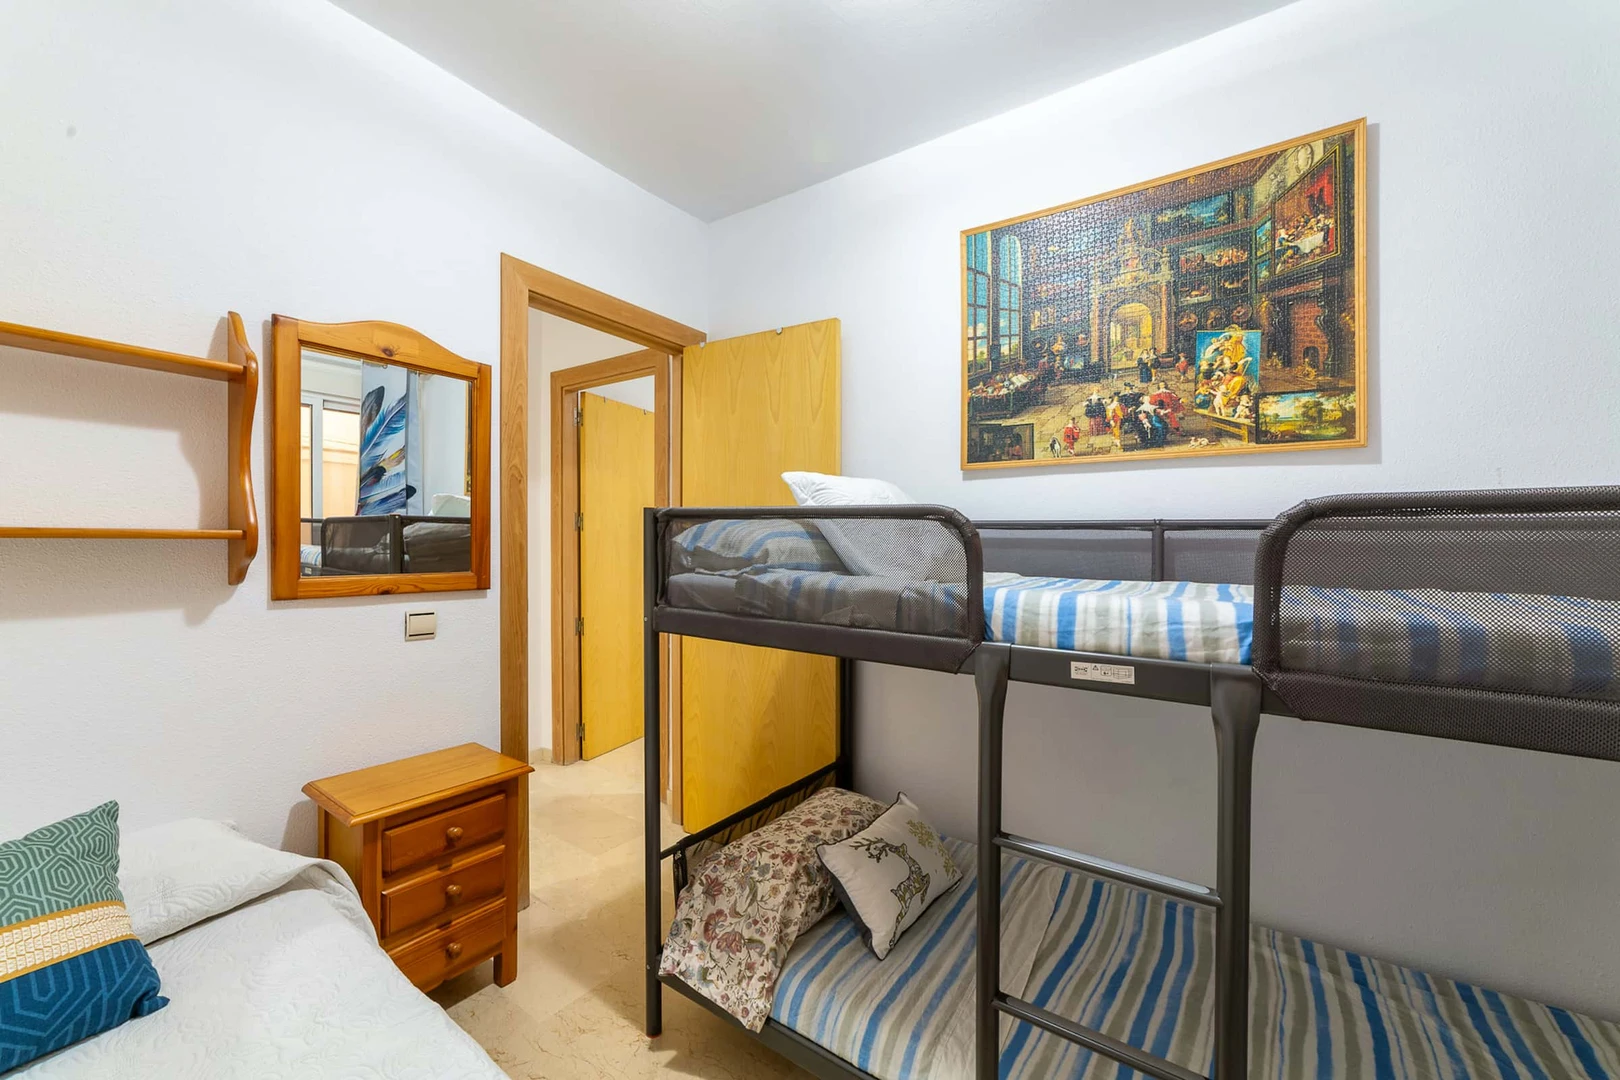 Entire fully furnished flat in Almeria